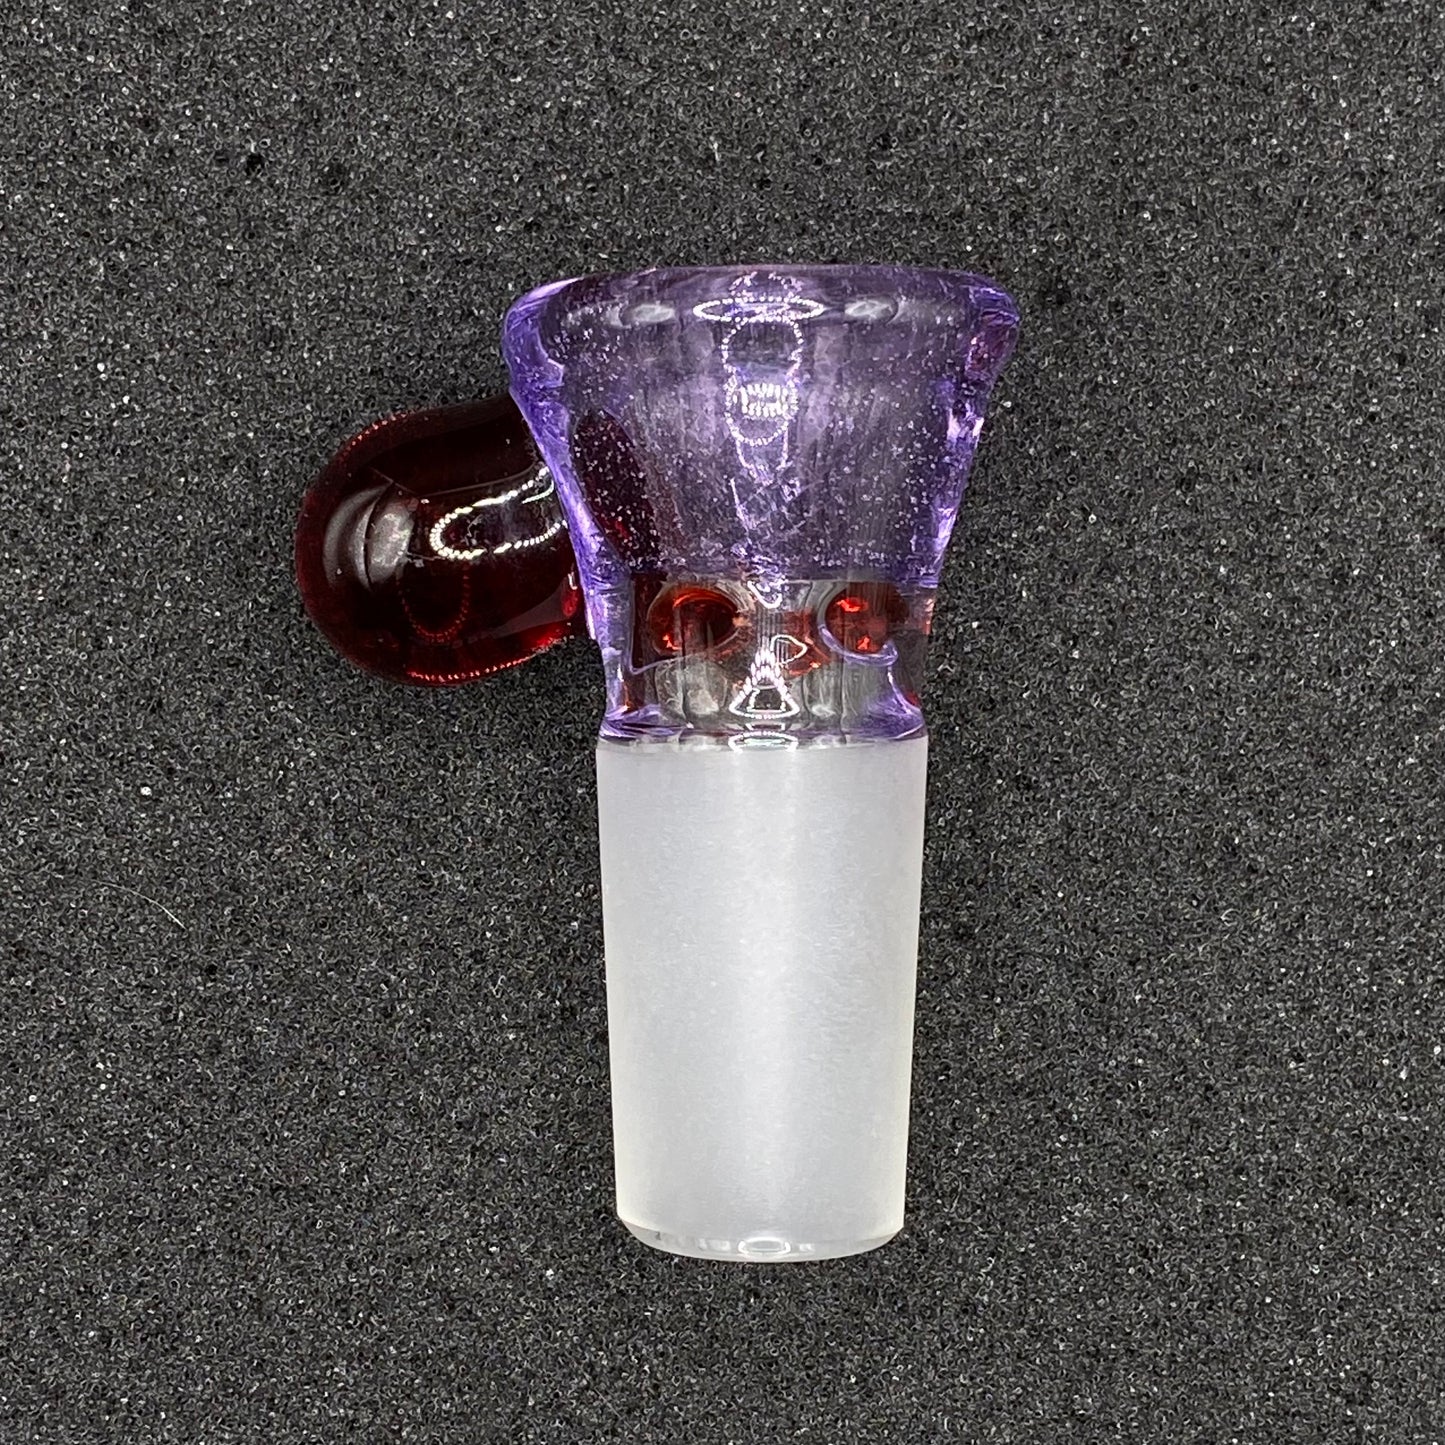 Brian Sheridan - 18mm 3-Hole Glass Bowl Slide - Purple Lollipop / Pomegranate